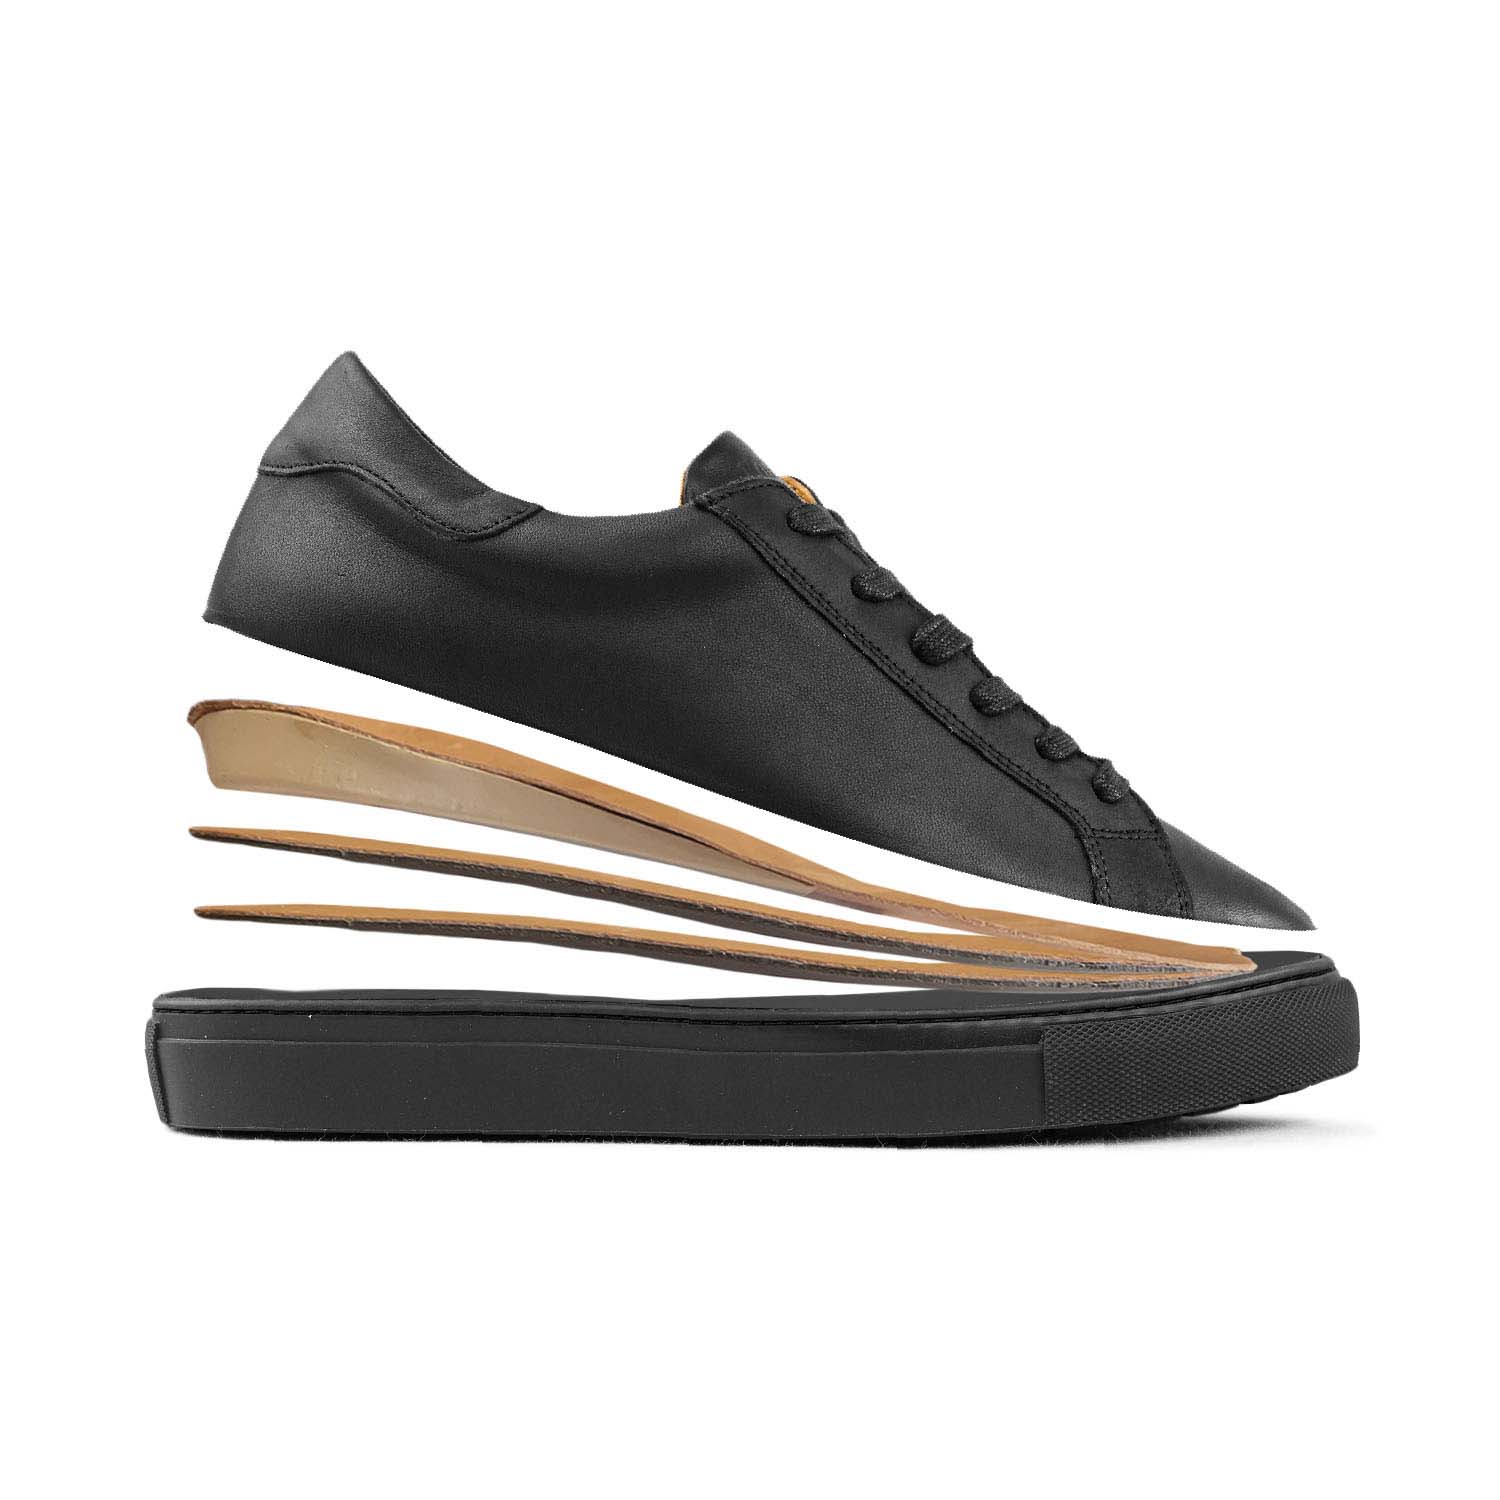 Sneakers skoffier noir confortable semelle amovible 